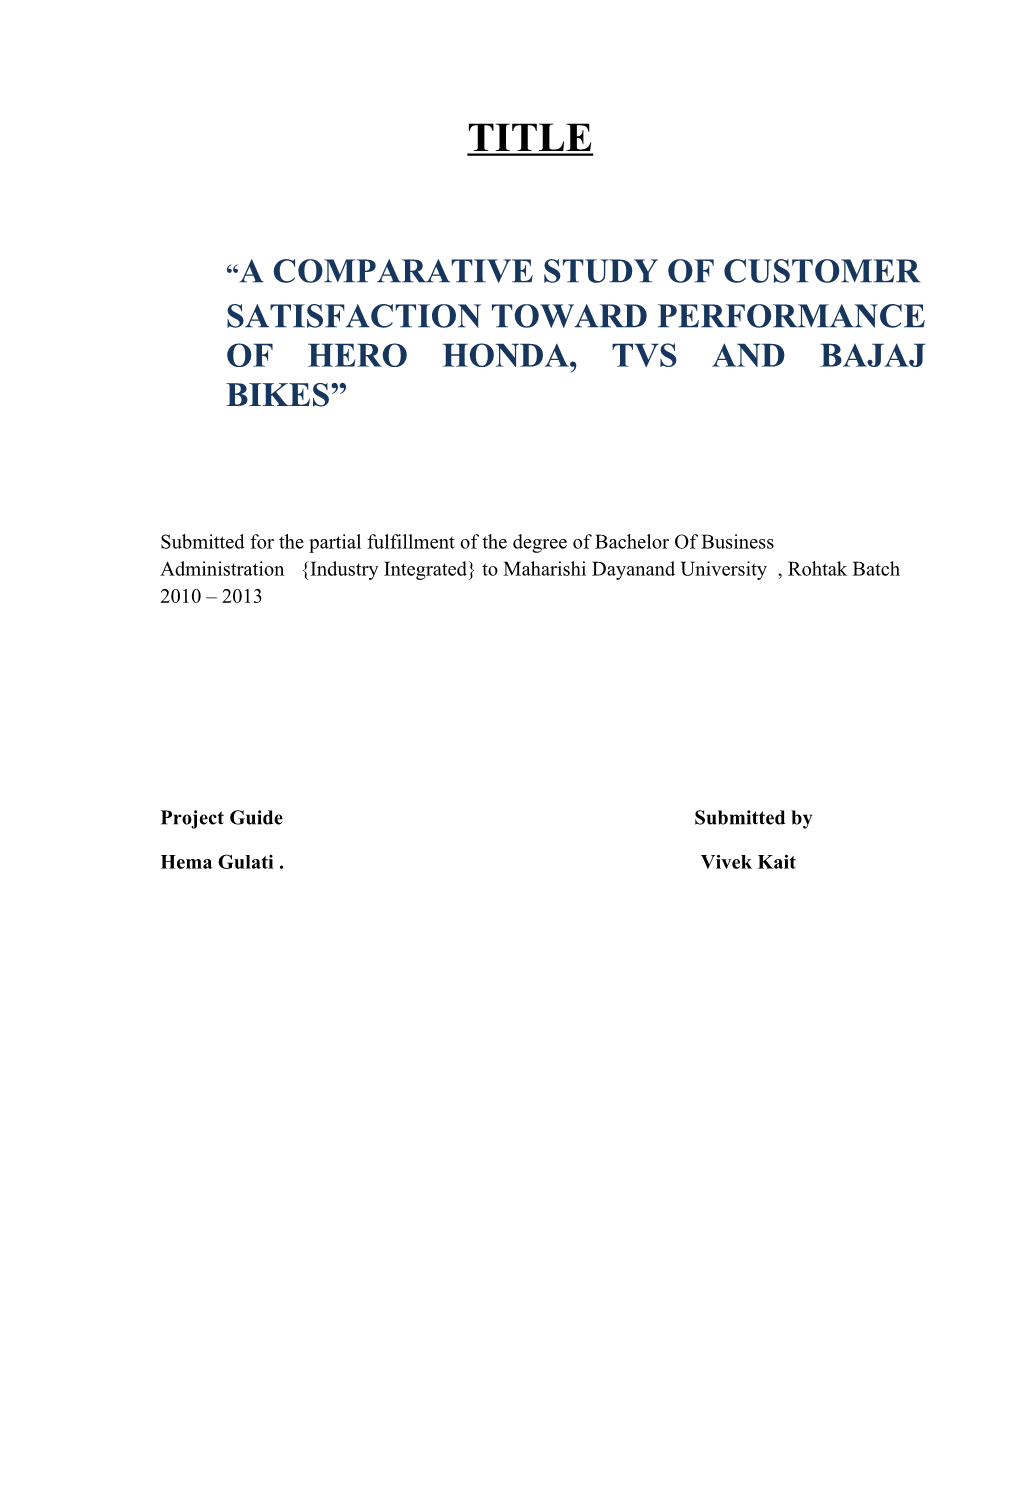 “A Comparative Study of Customer Satisfaction Toward Performance of Hero Honda, Tvs and Bajaj Bikes”